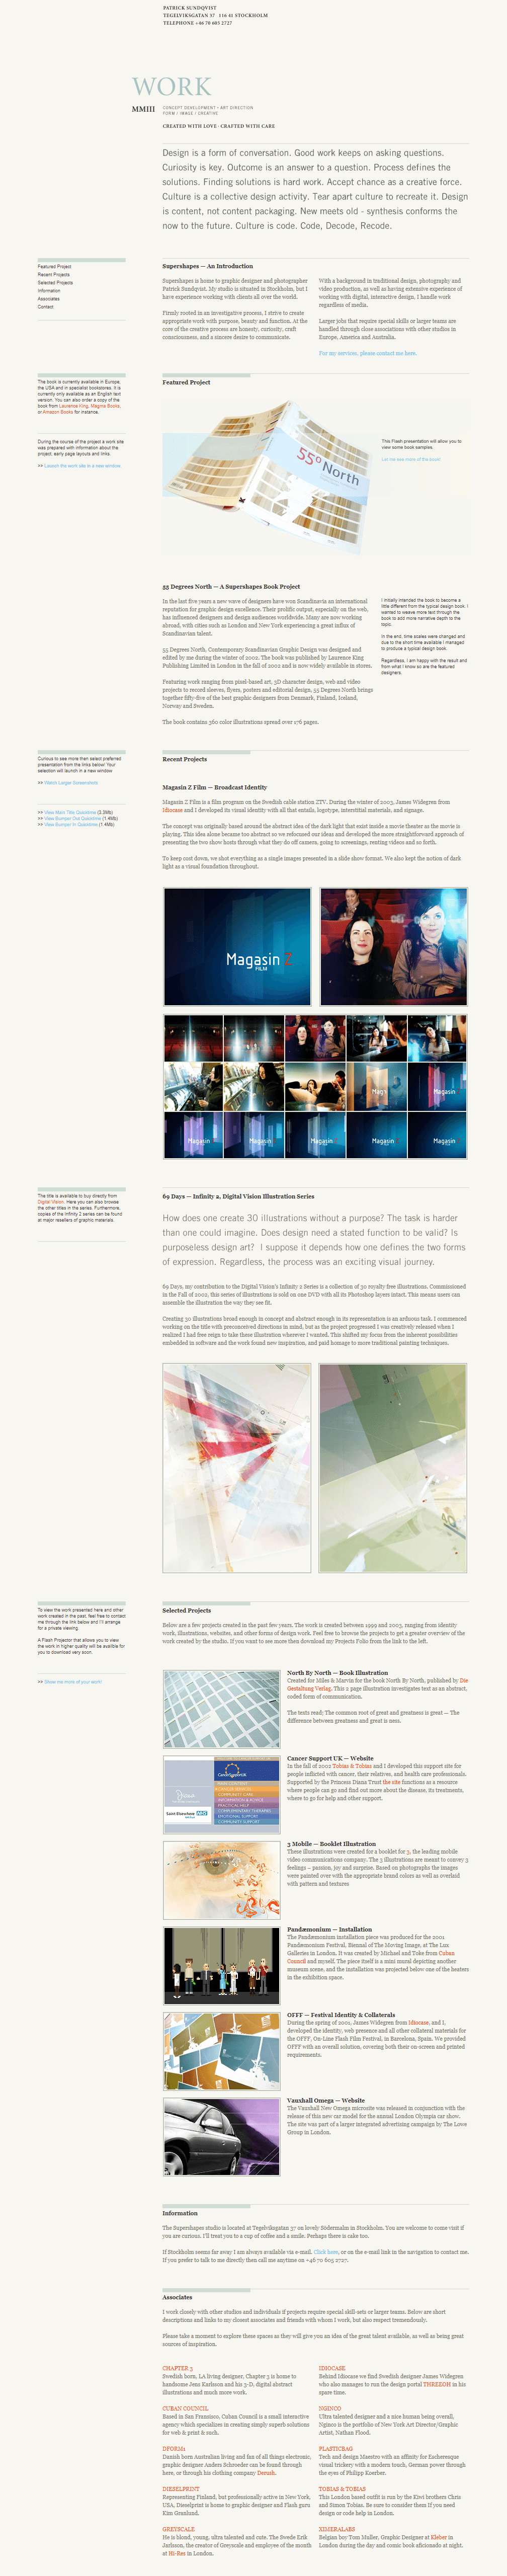 Supershapes website in 2003